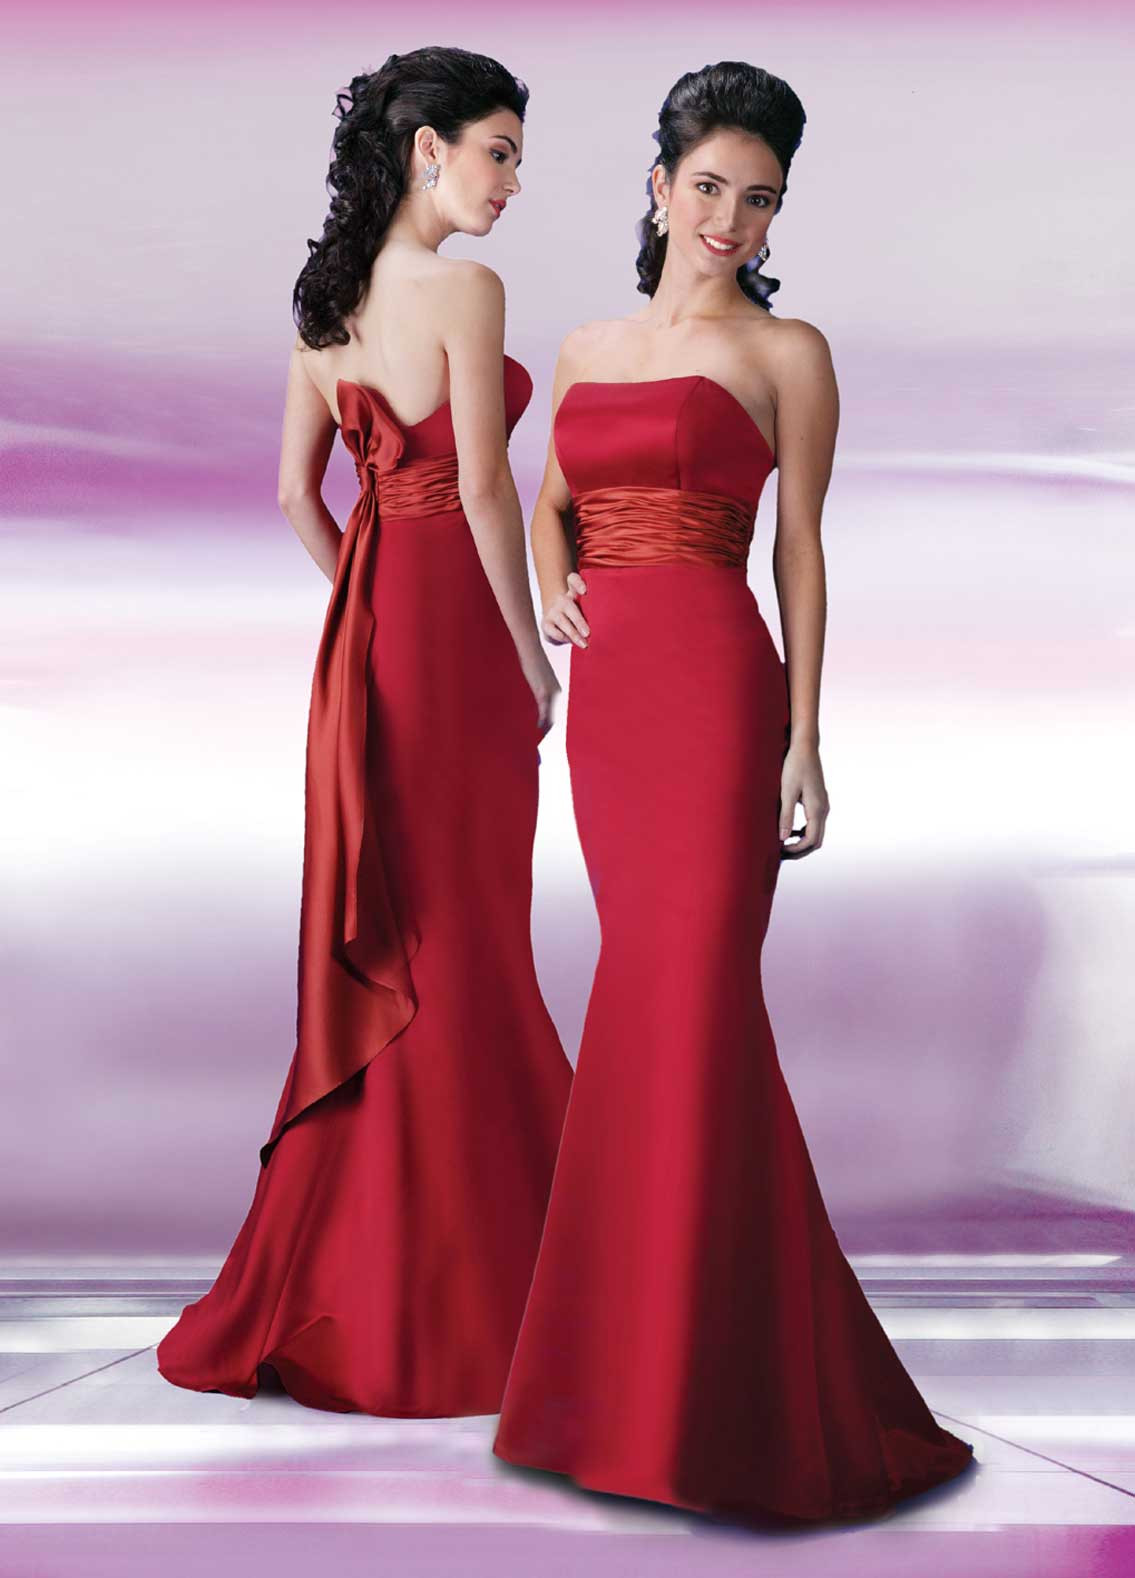 Wedding Dresses Images
 Red Wedding Dress Designs In 2012 Wedding Dress